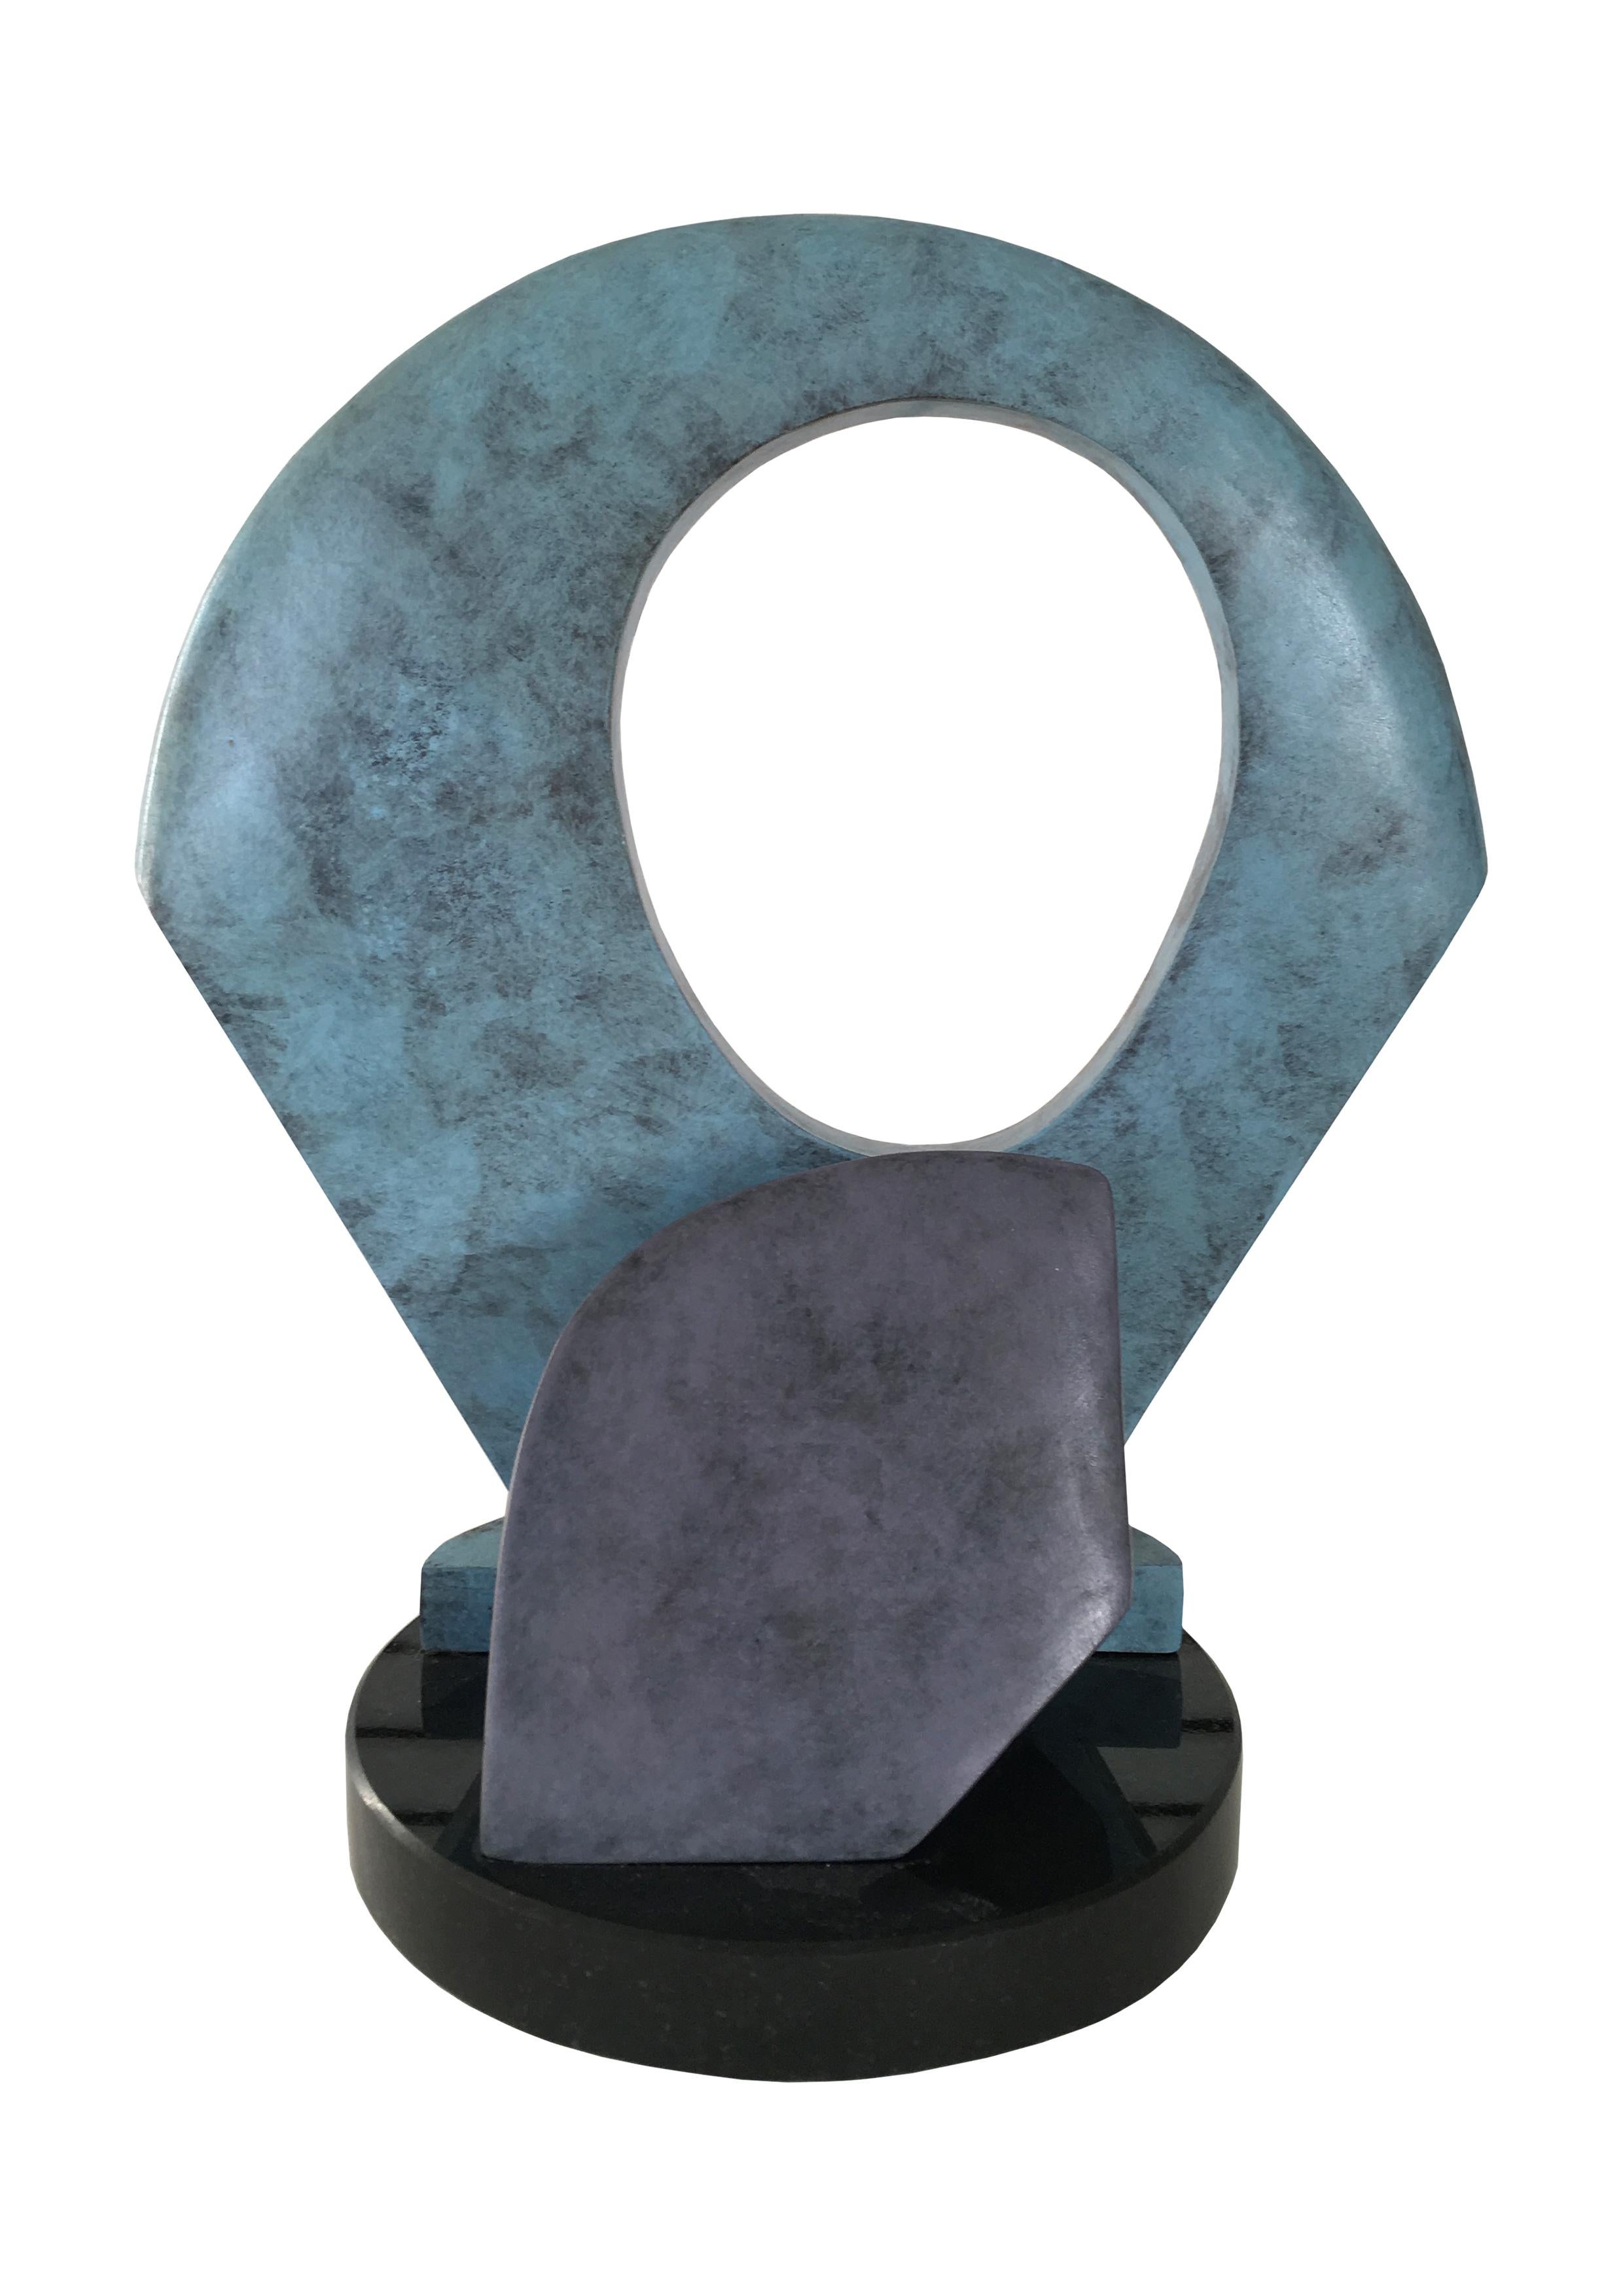 Flint Forms-original abstract sculpture-artwork for sale-contemporary Art